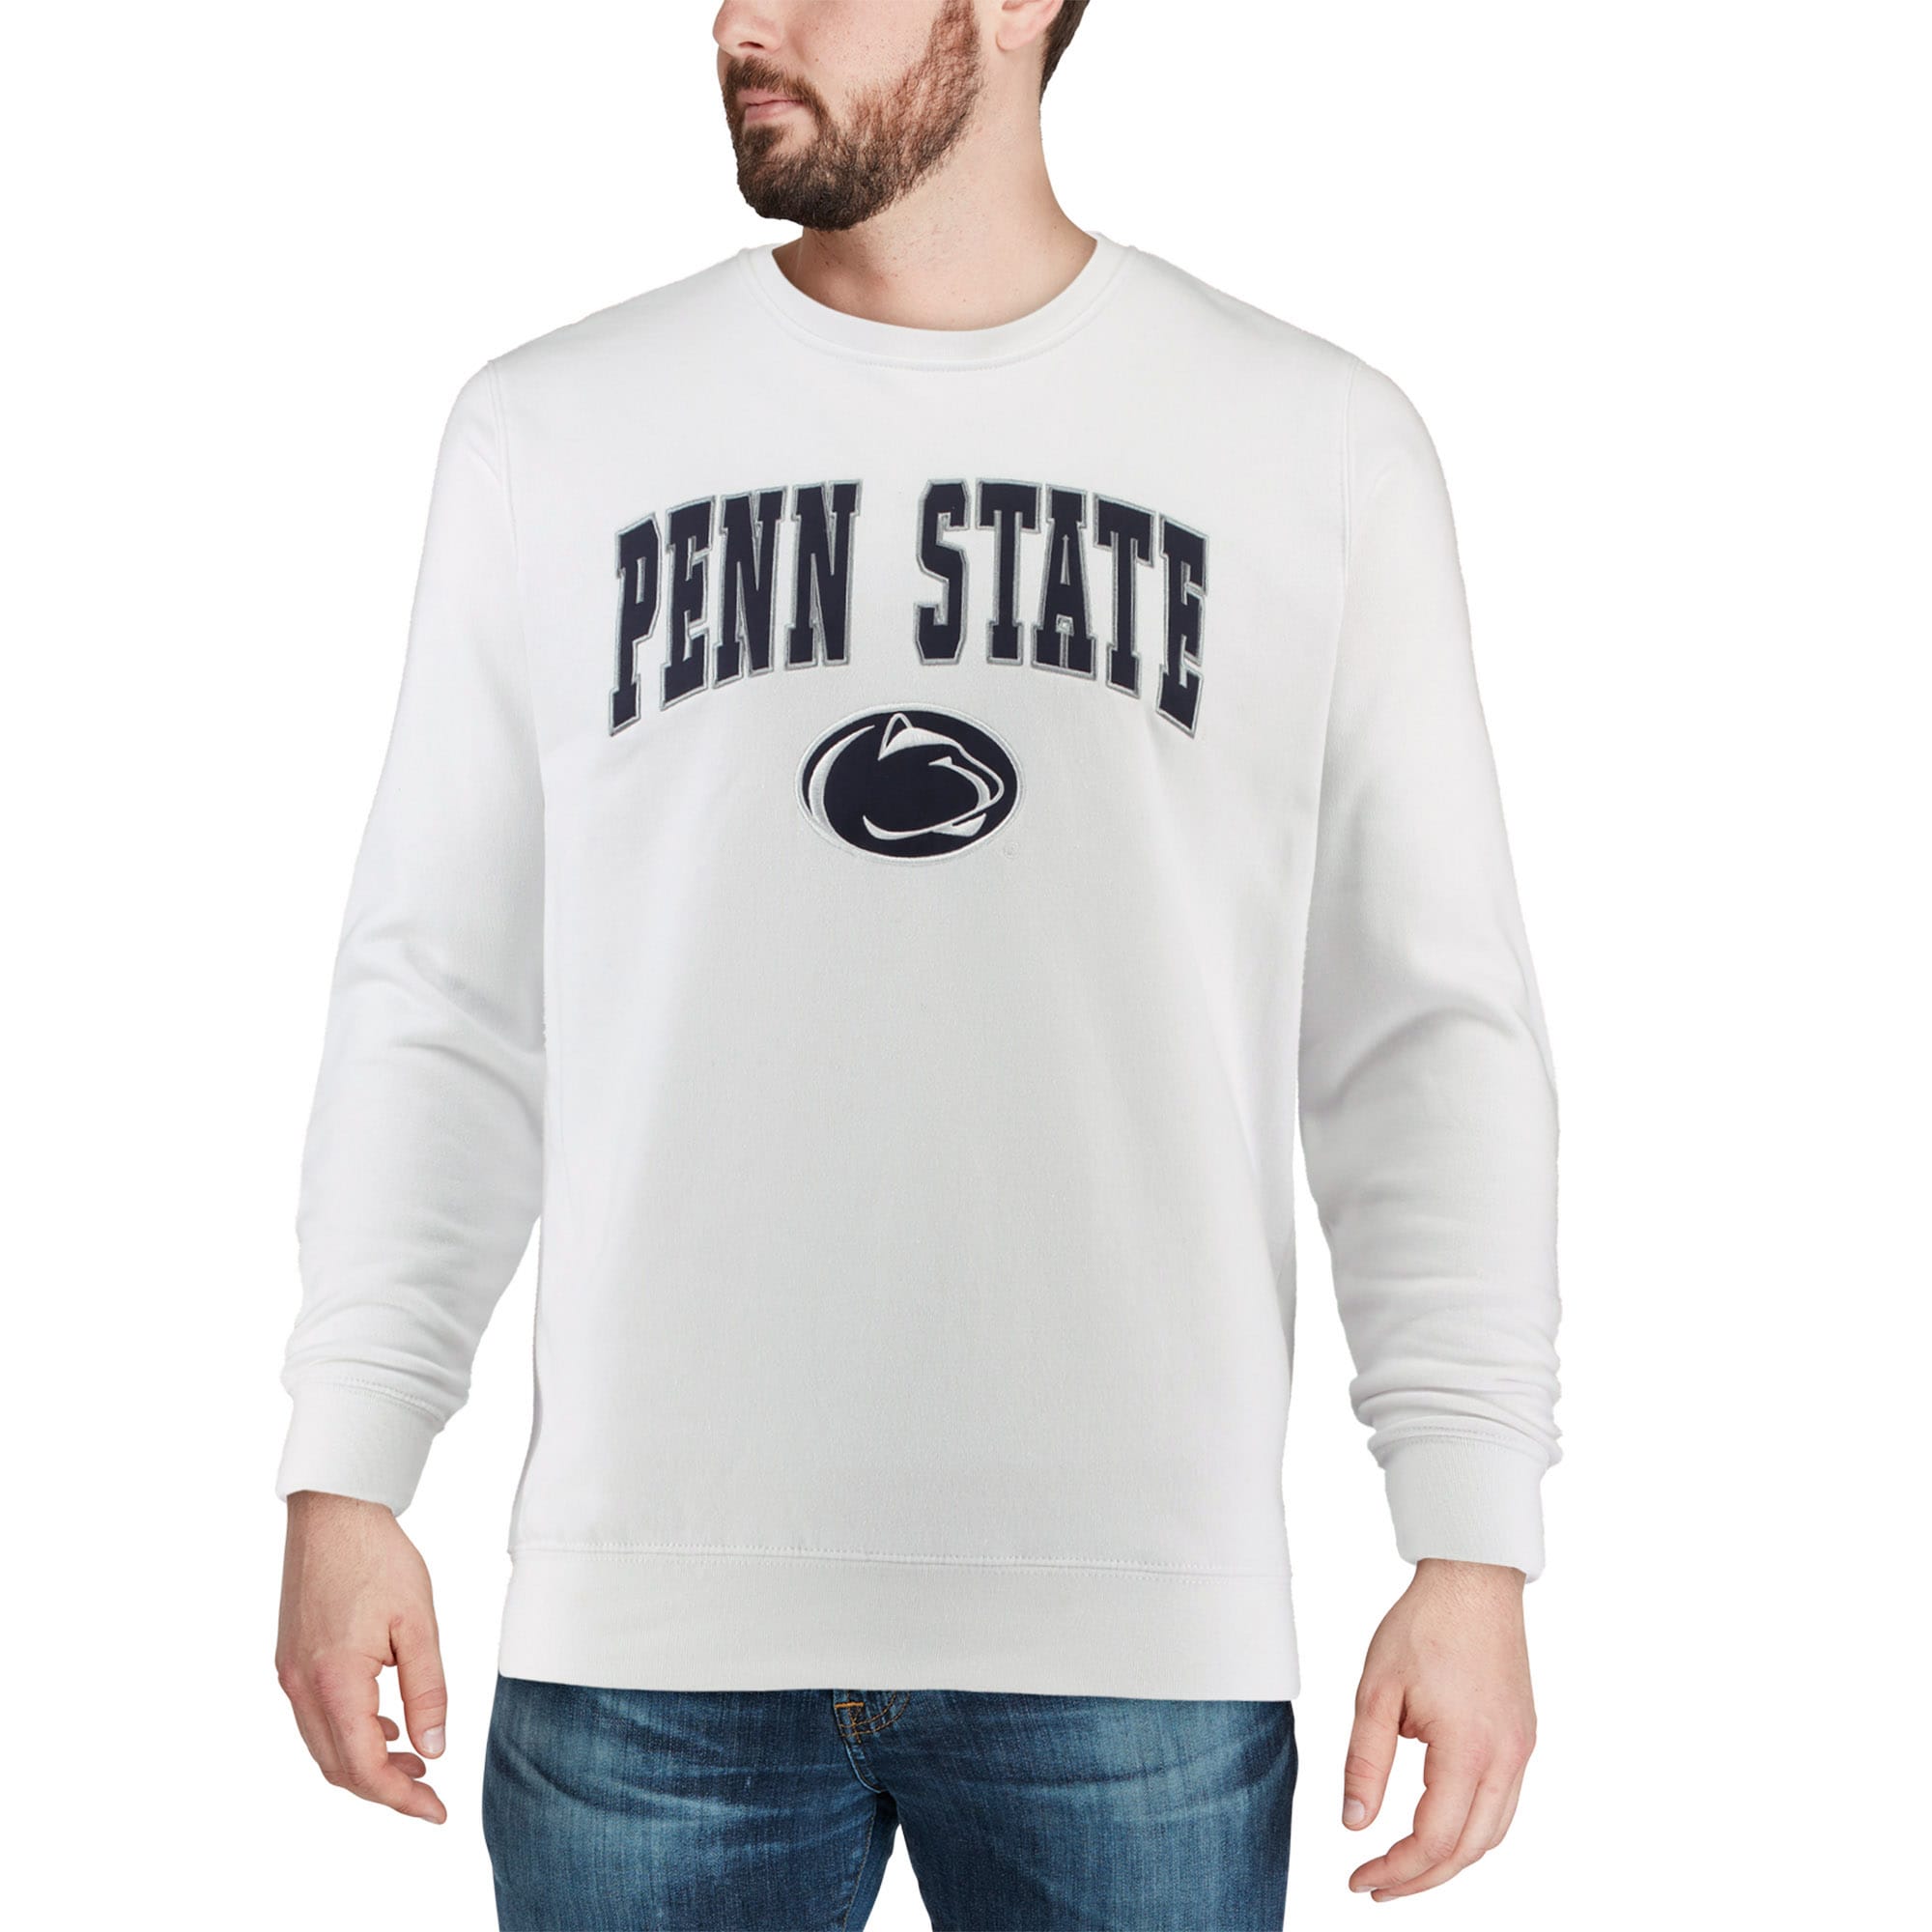 Men's Colosseum White Penn State Nittany Lions Arch & Logo Crew Neck Sweatshirt - image 3 of 4